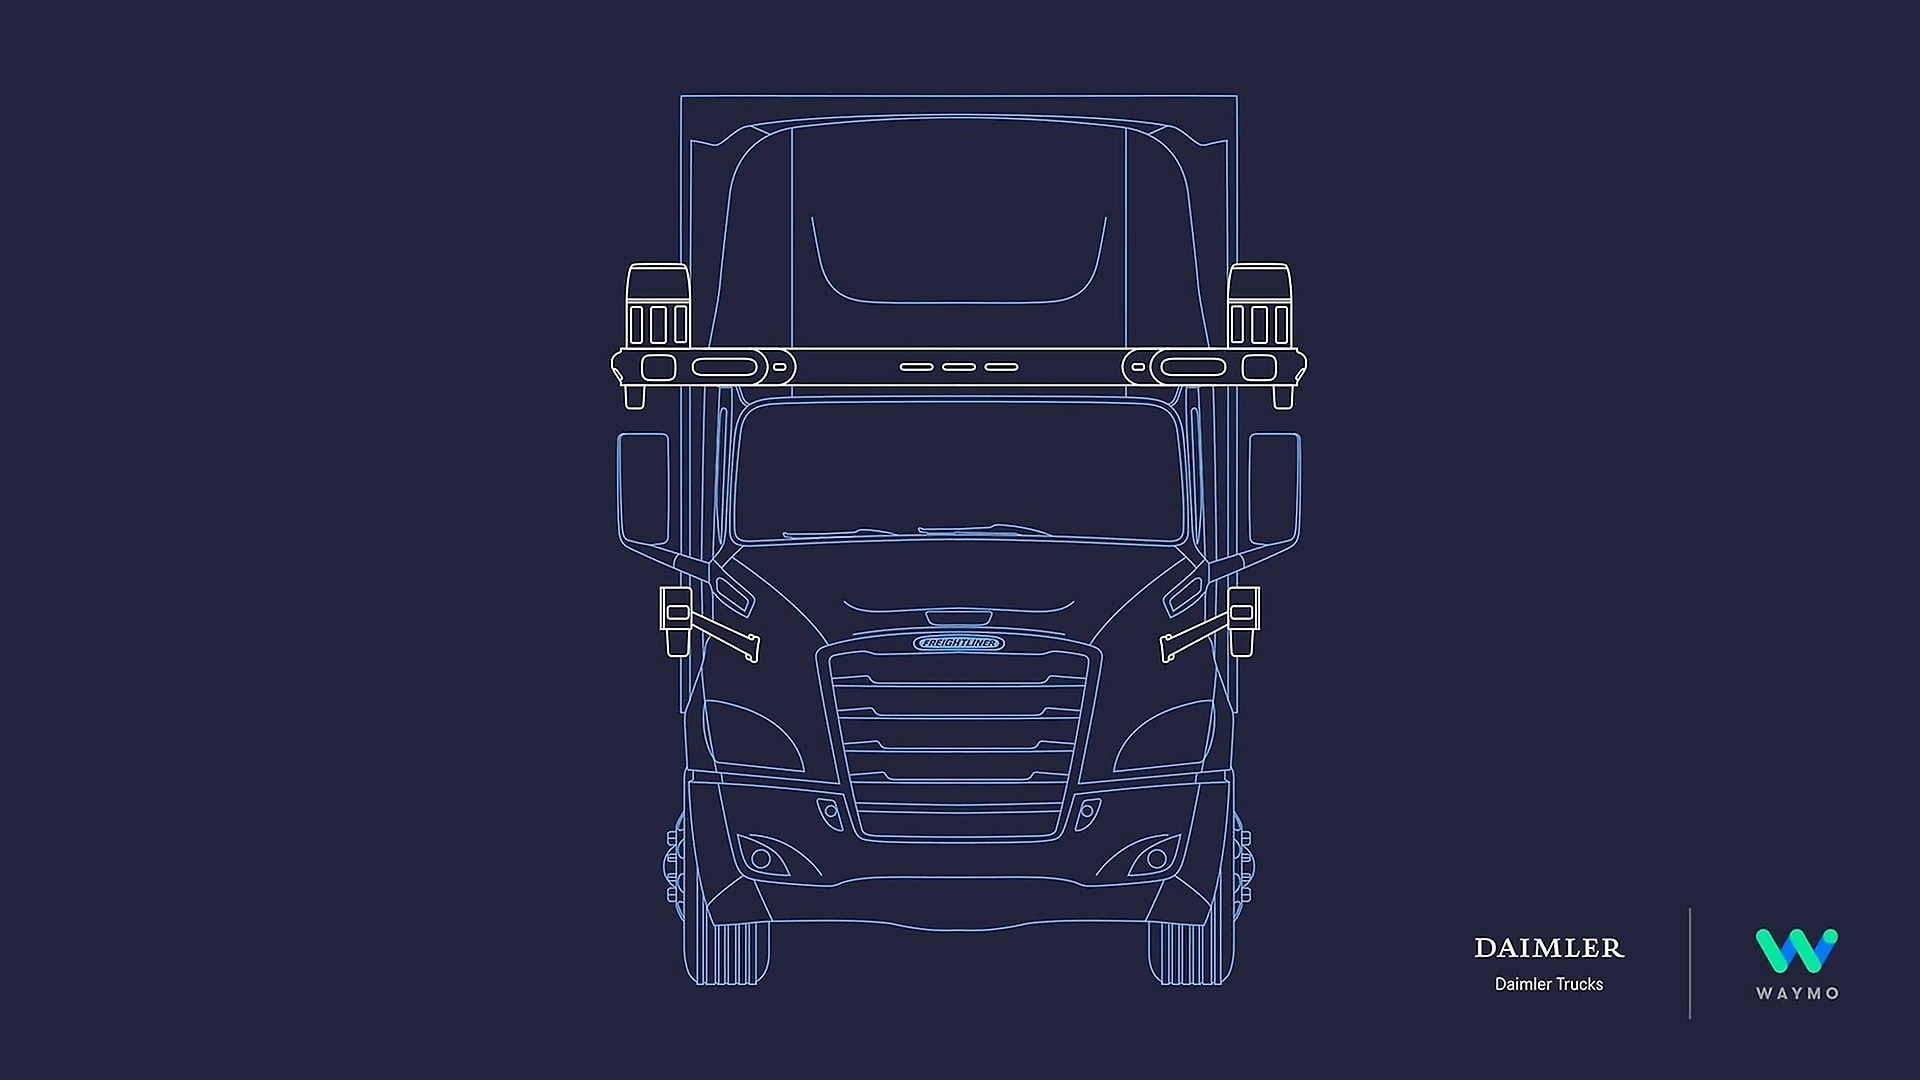 Daimler Trucks and Waymo enter into partnership.